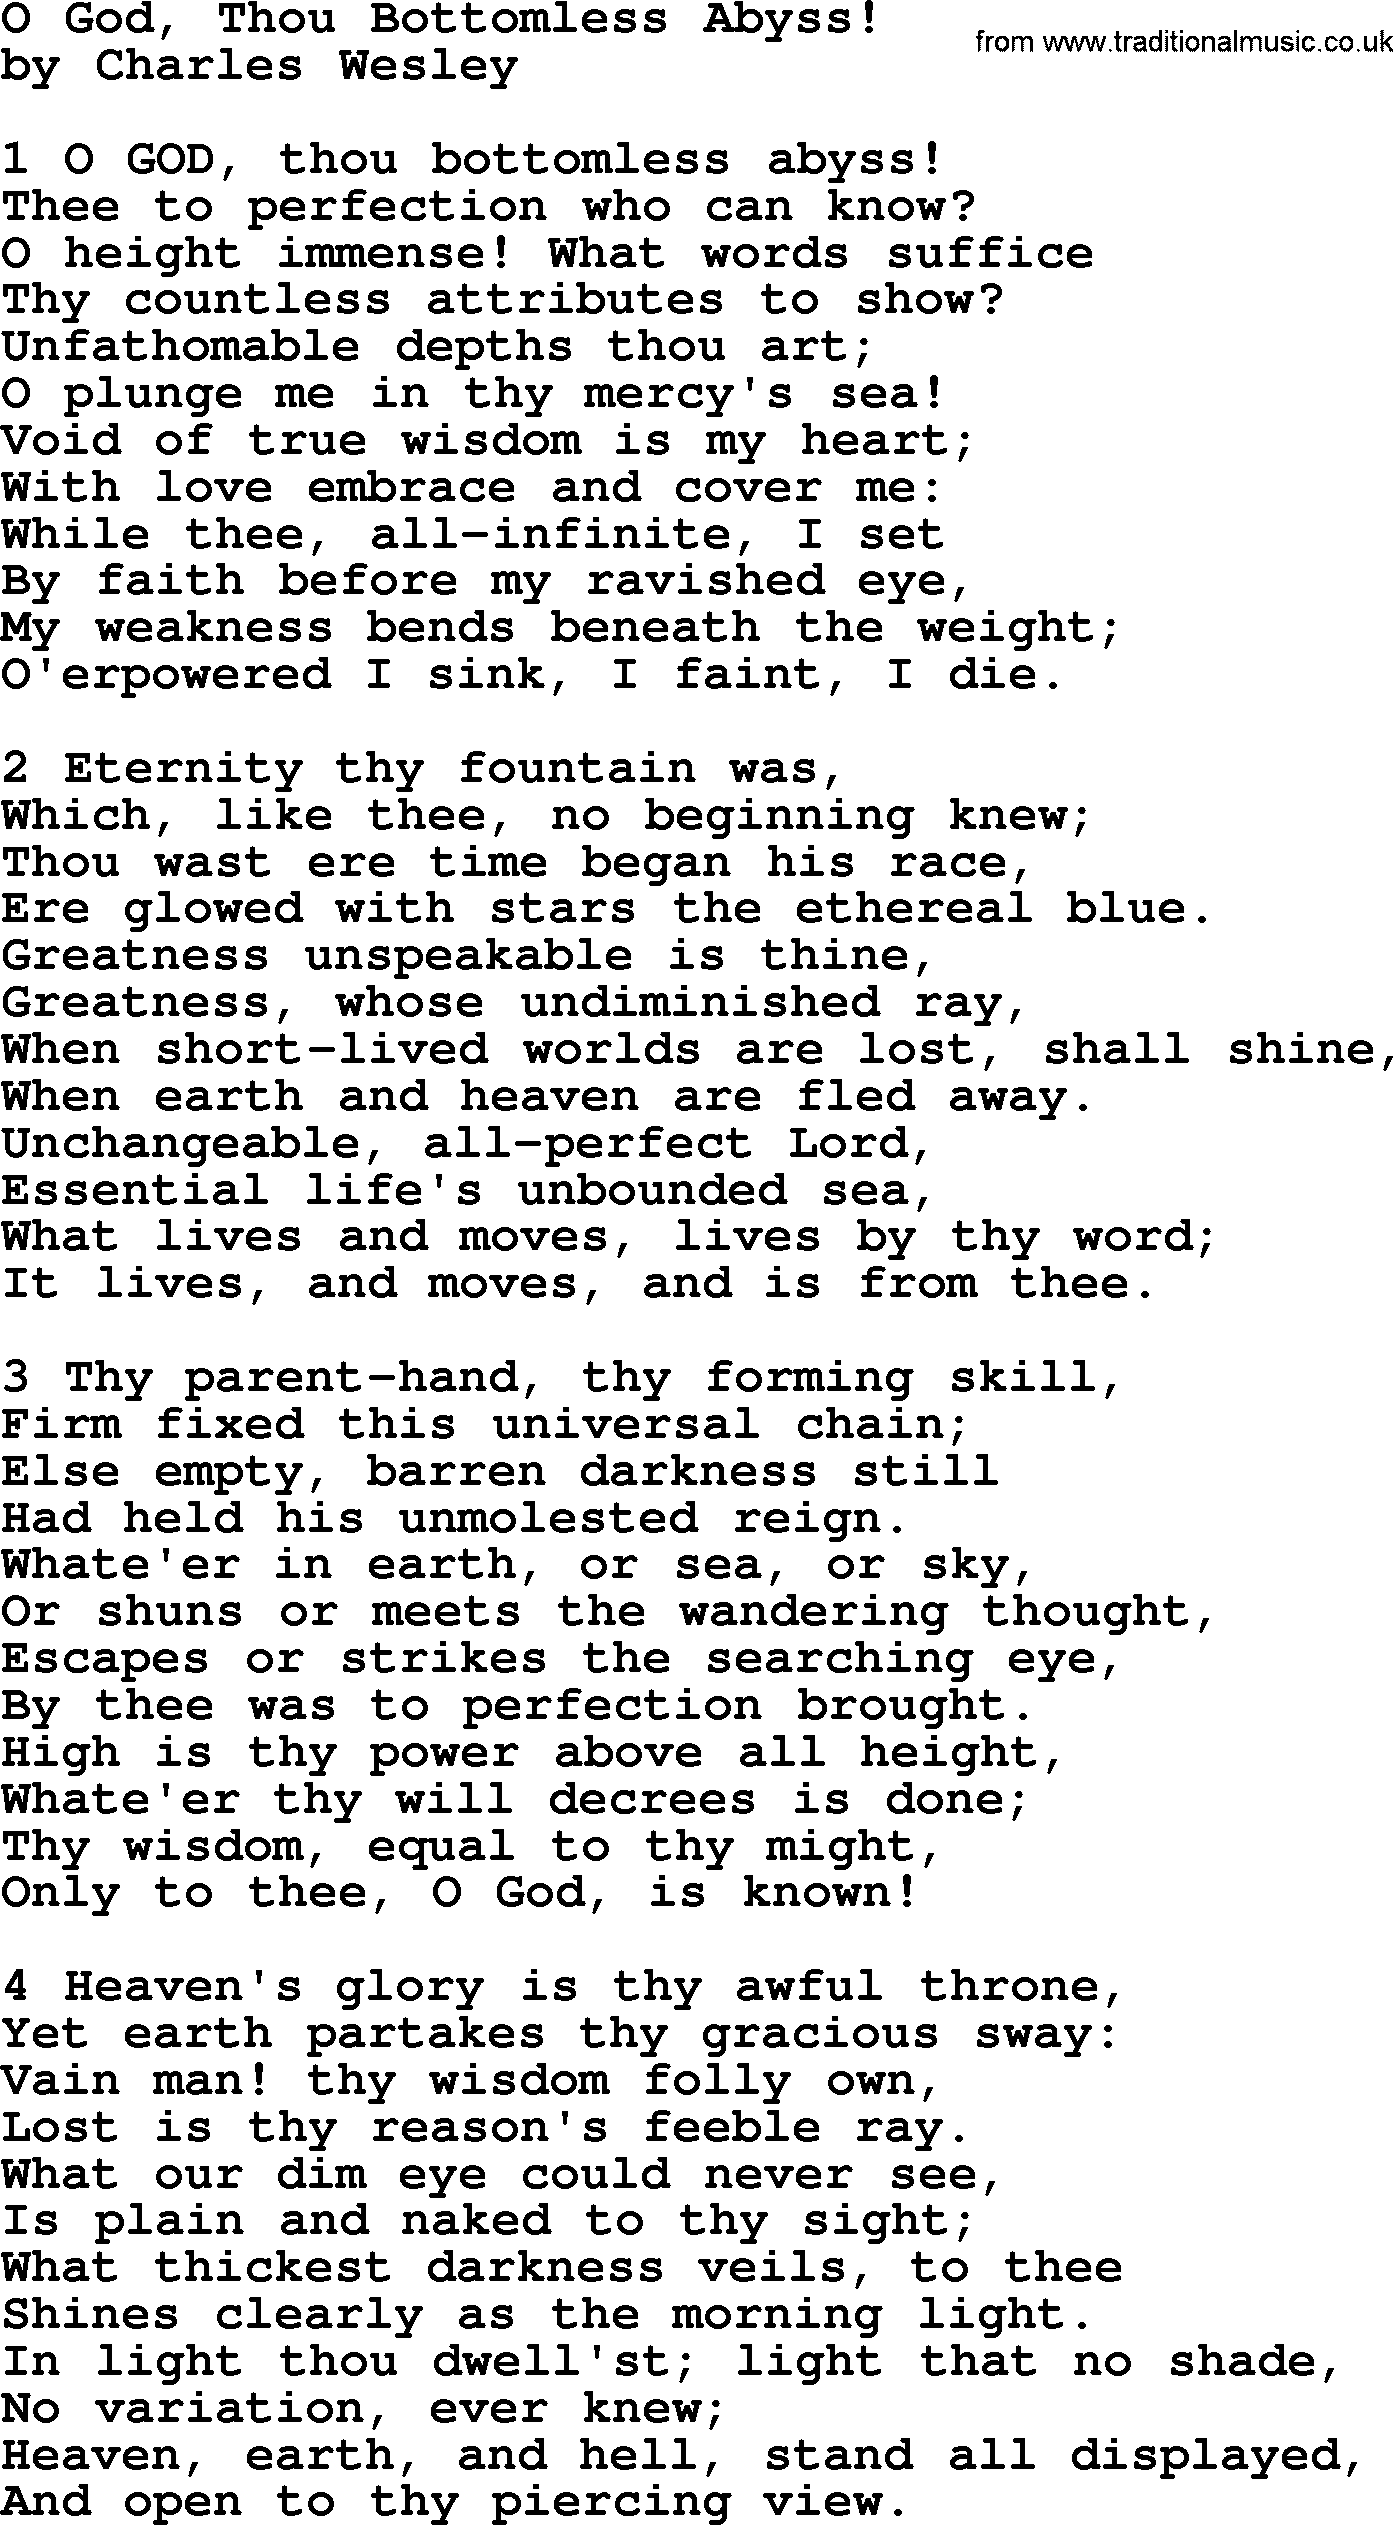 Charles Wesley hymn: O God, Thou Bottomless Abyss!, lyrics